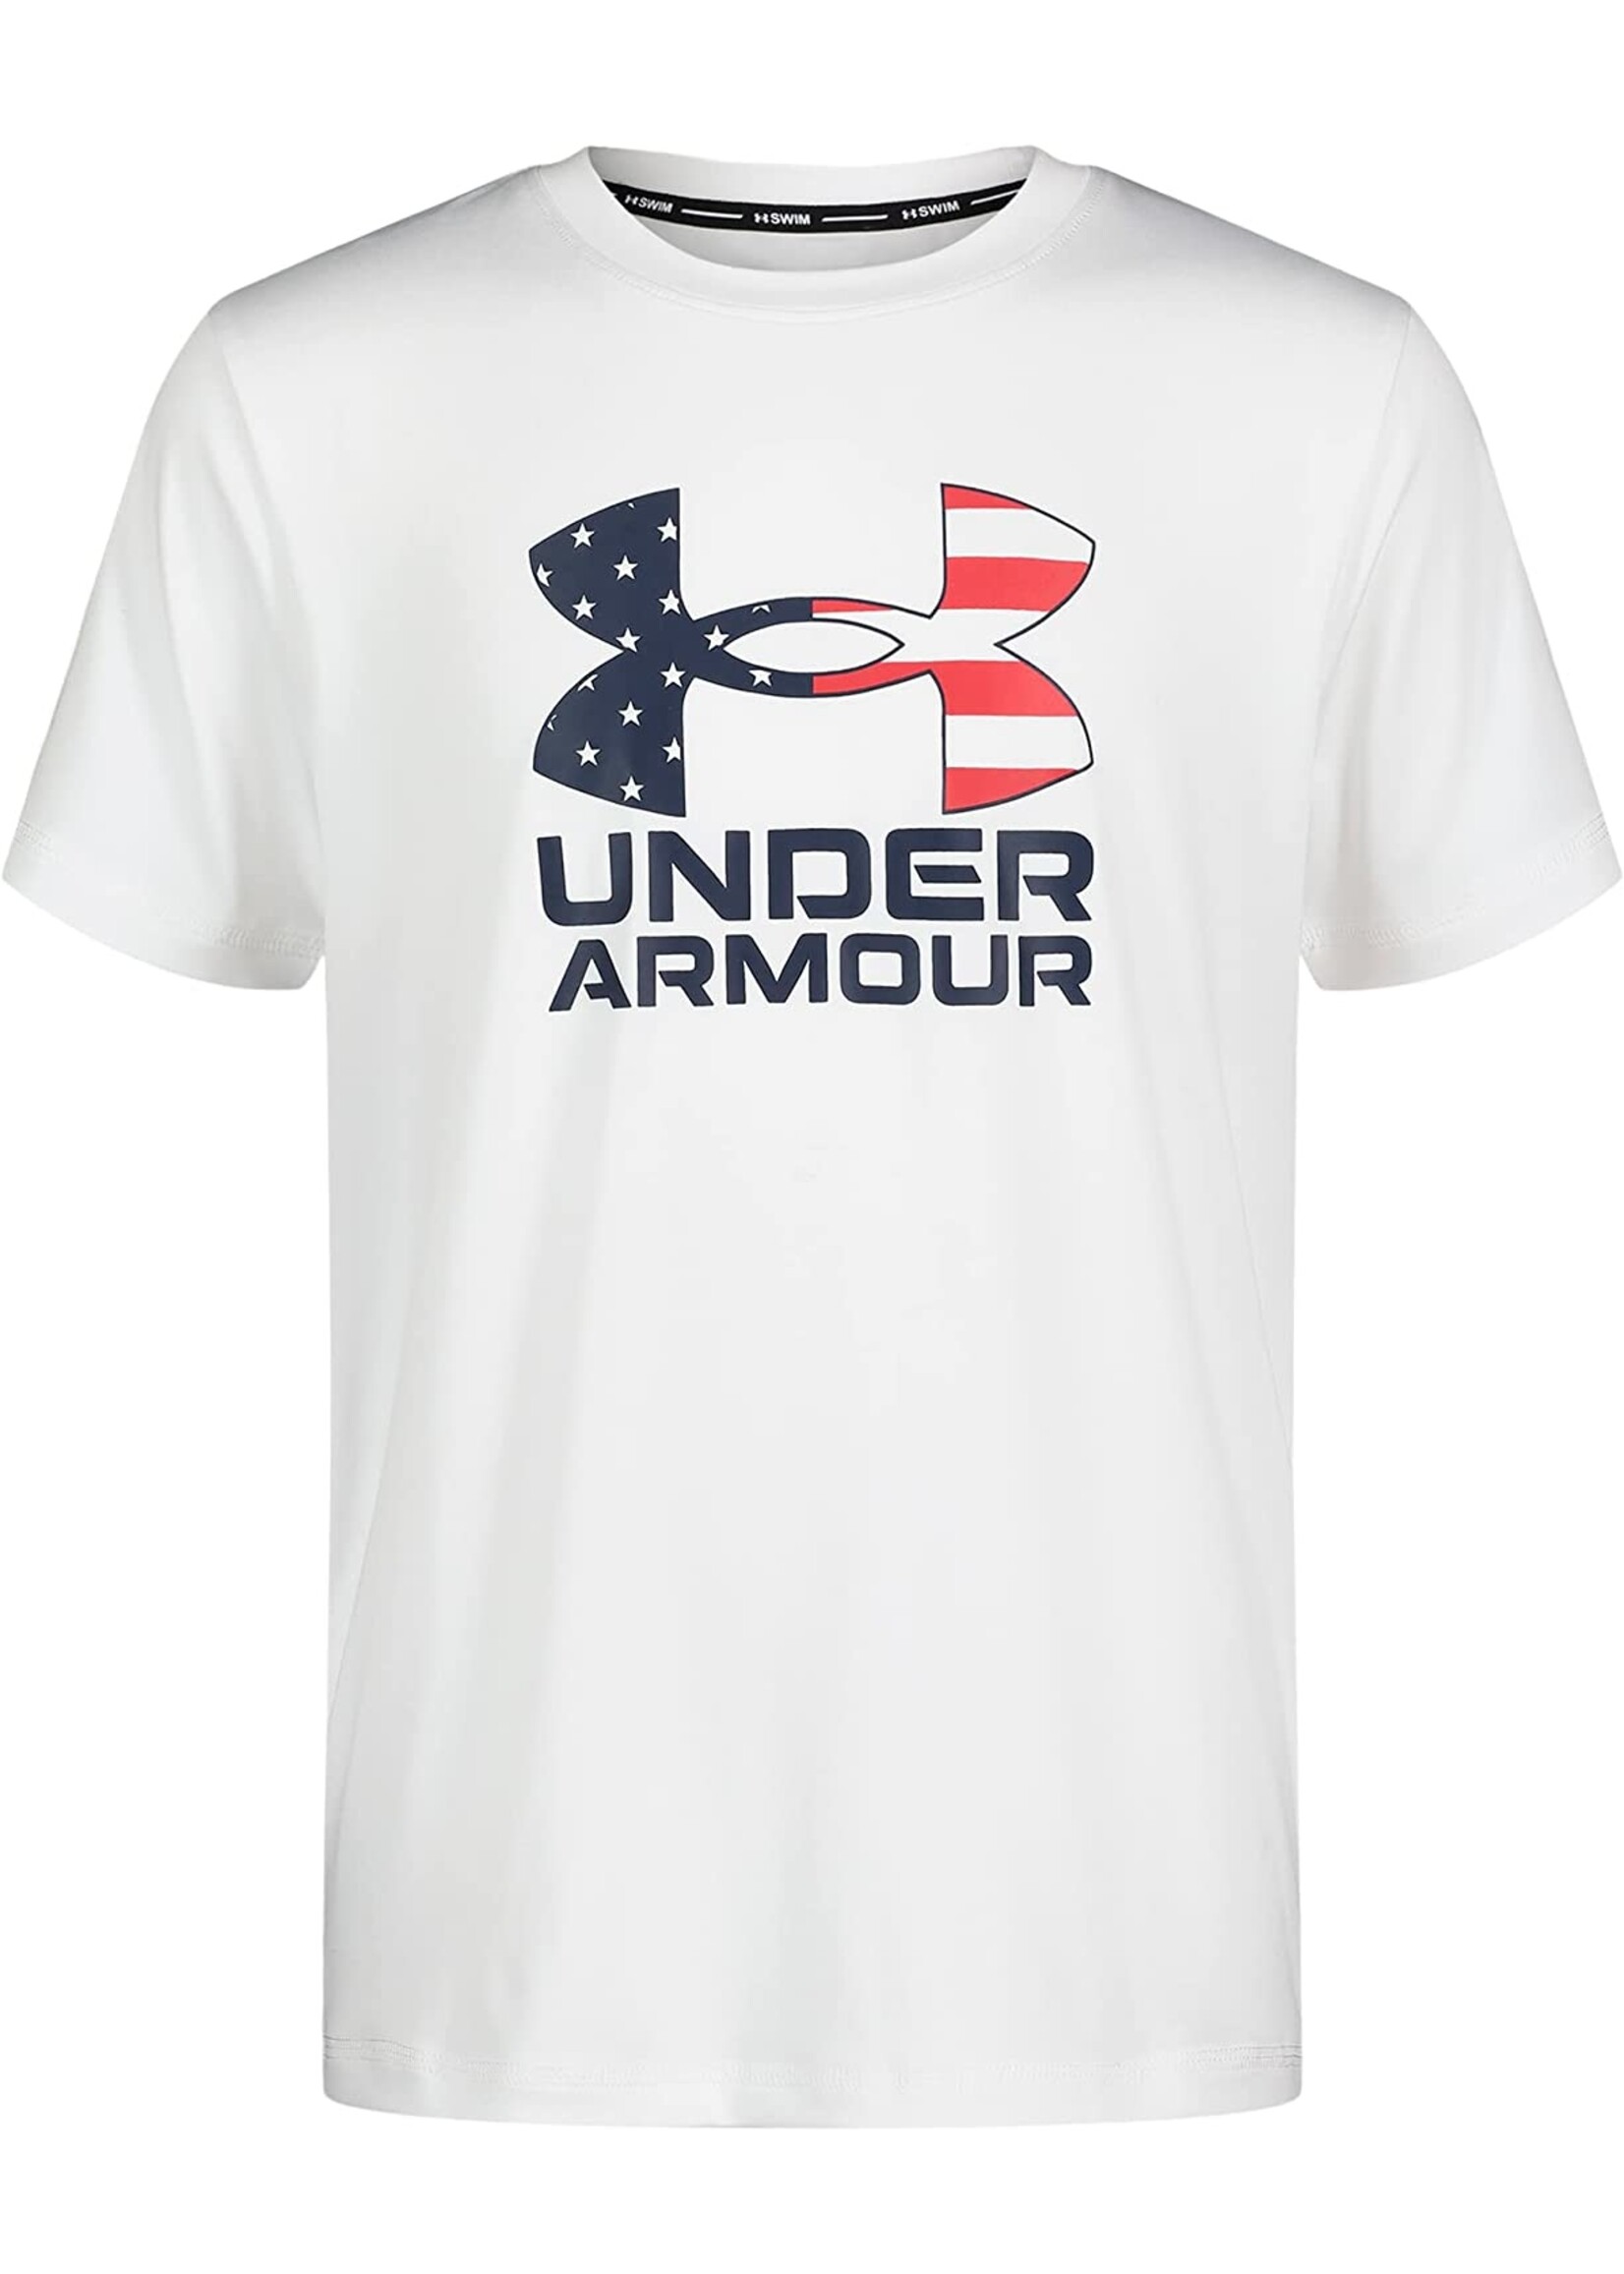 Under Armour Americana Surf Shirt